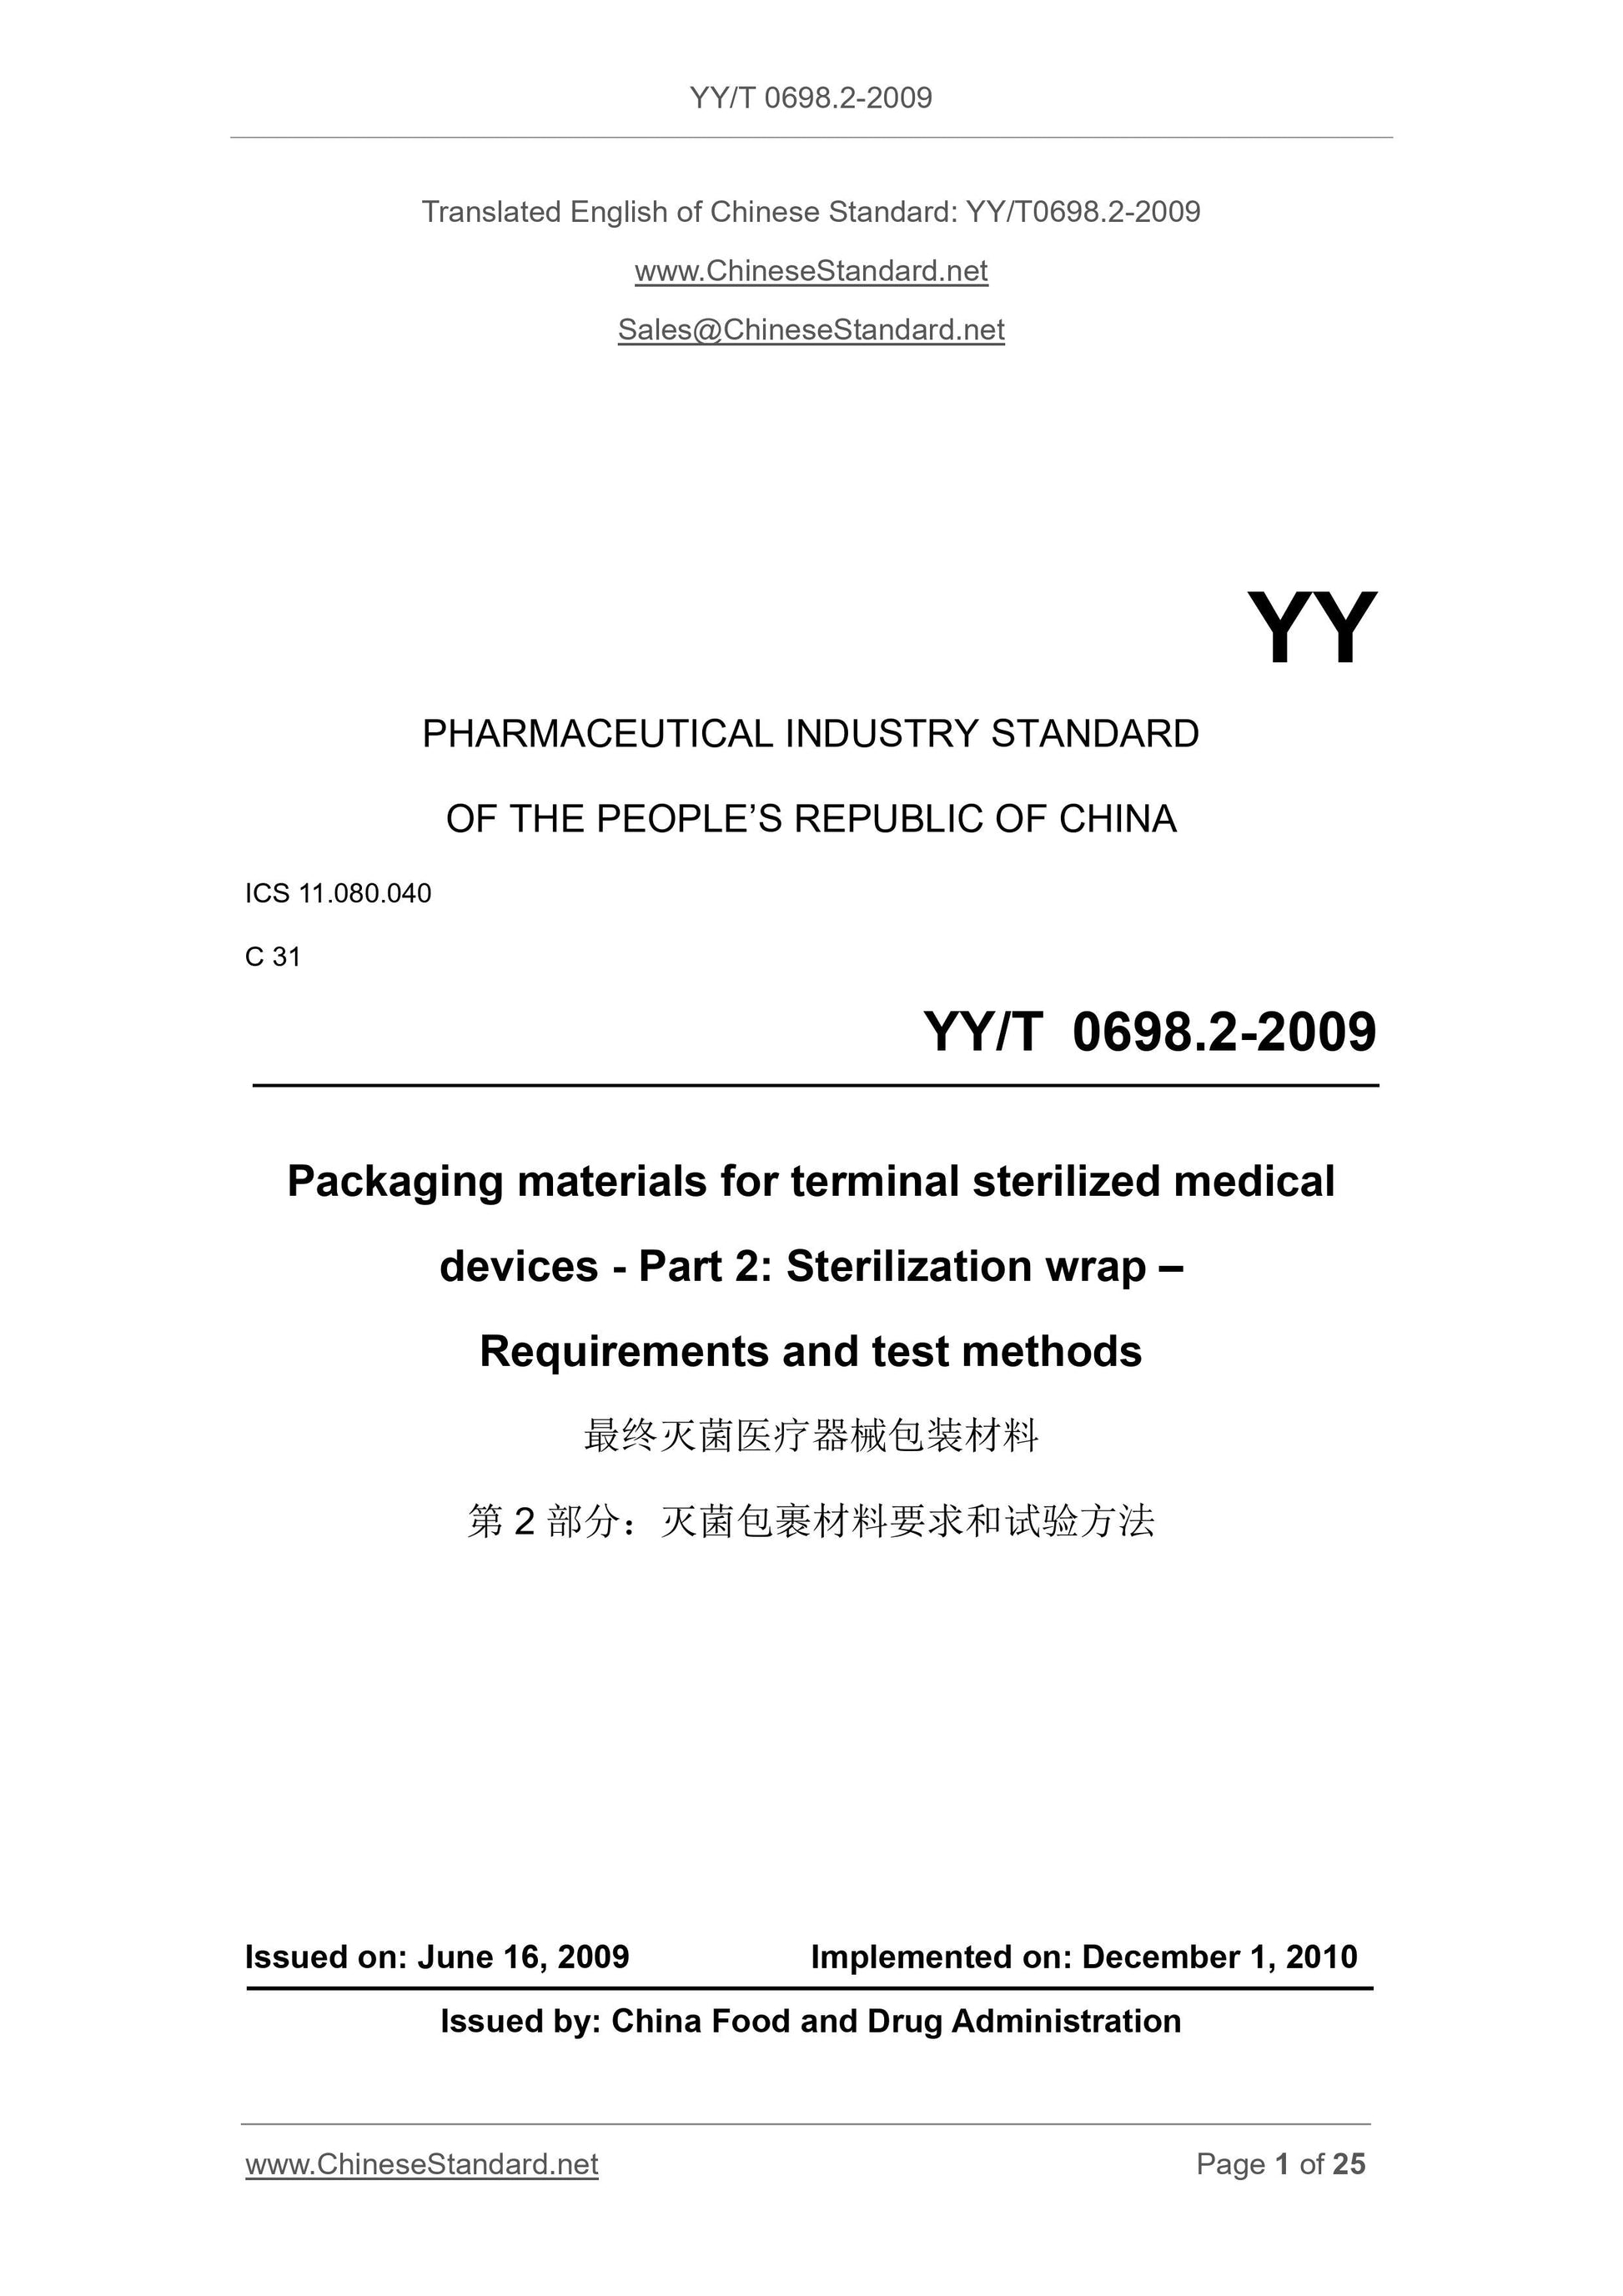 YY/T 0698.2-2009 Page 1